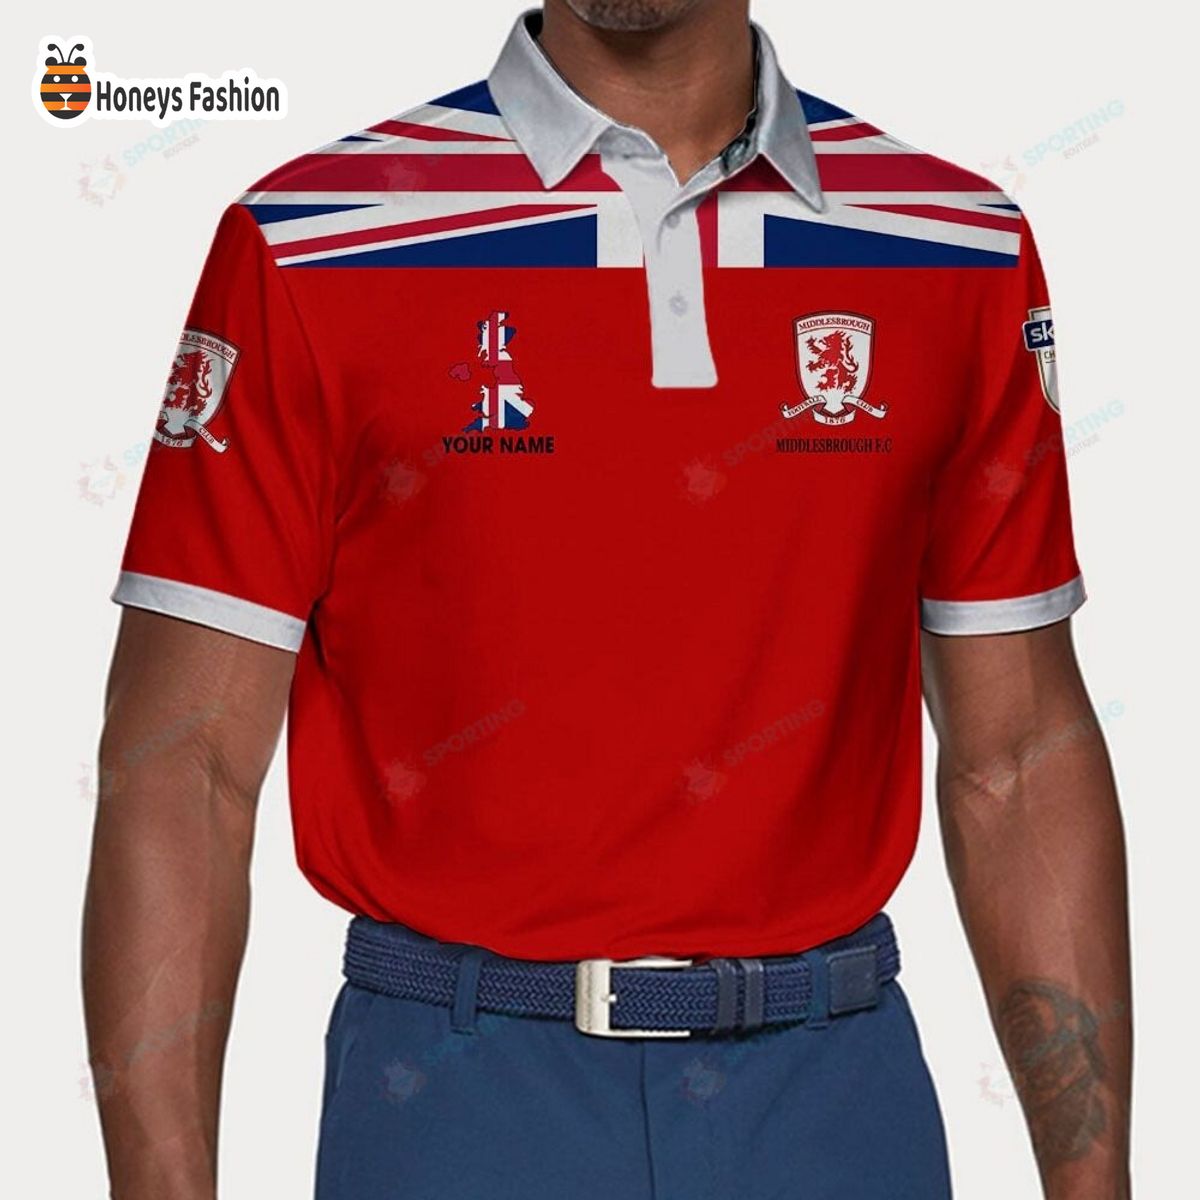 Middlesbrough F.C custom name polo shirt